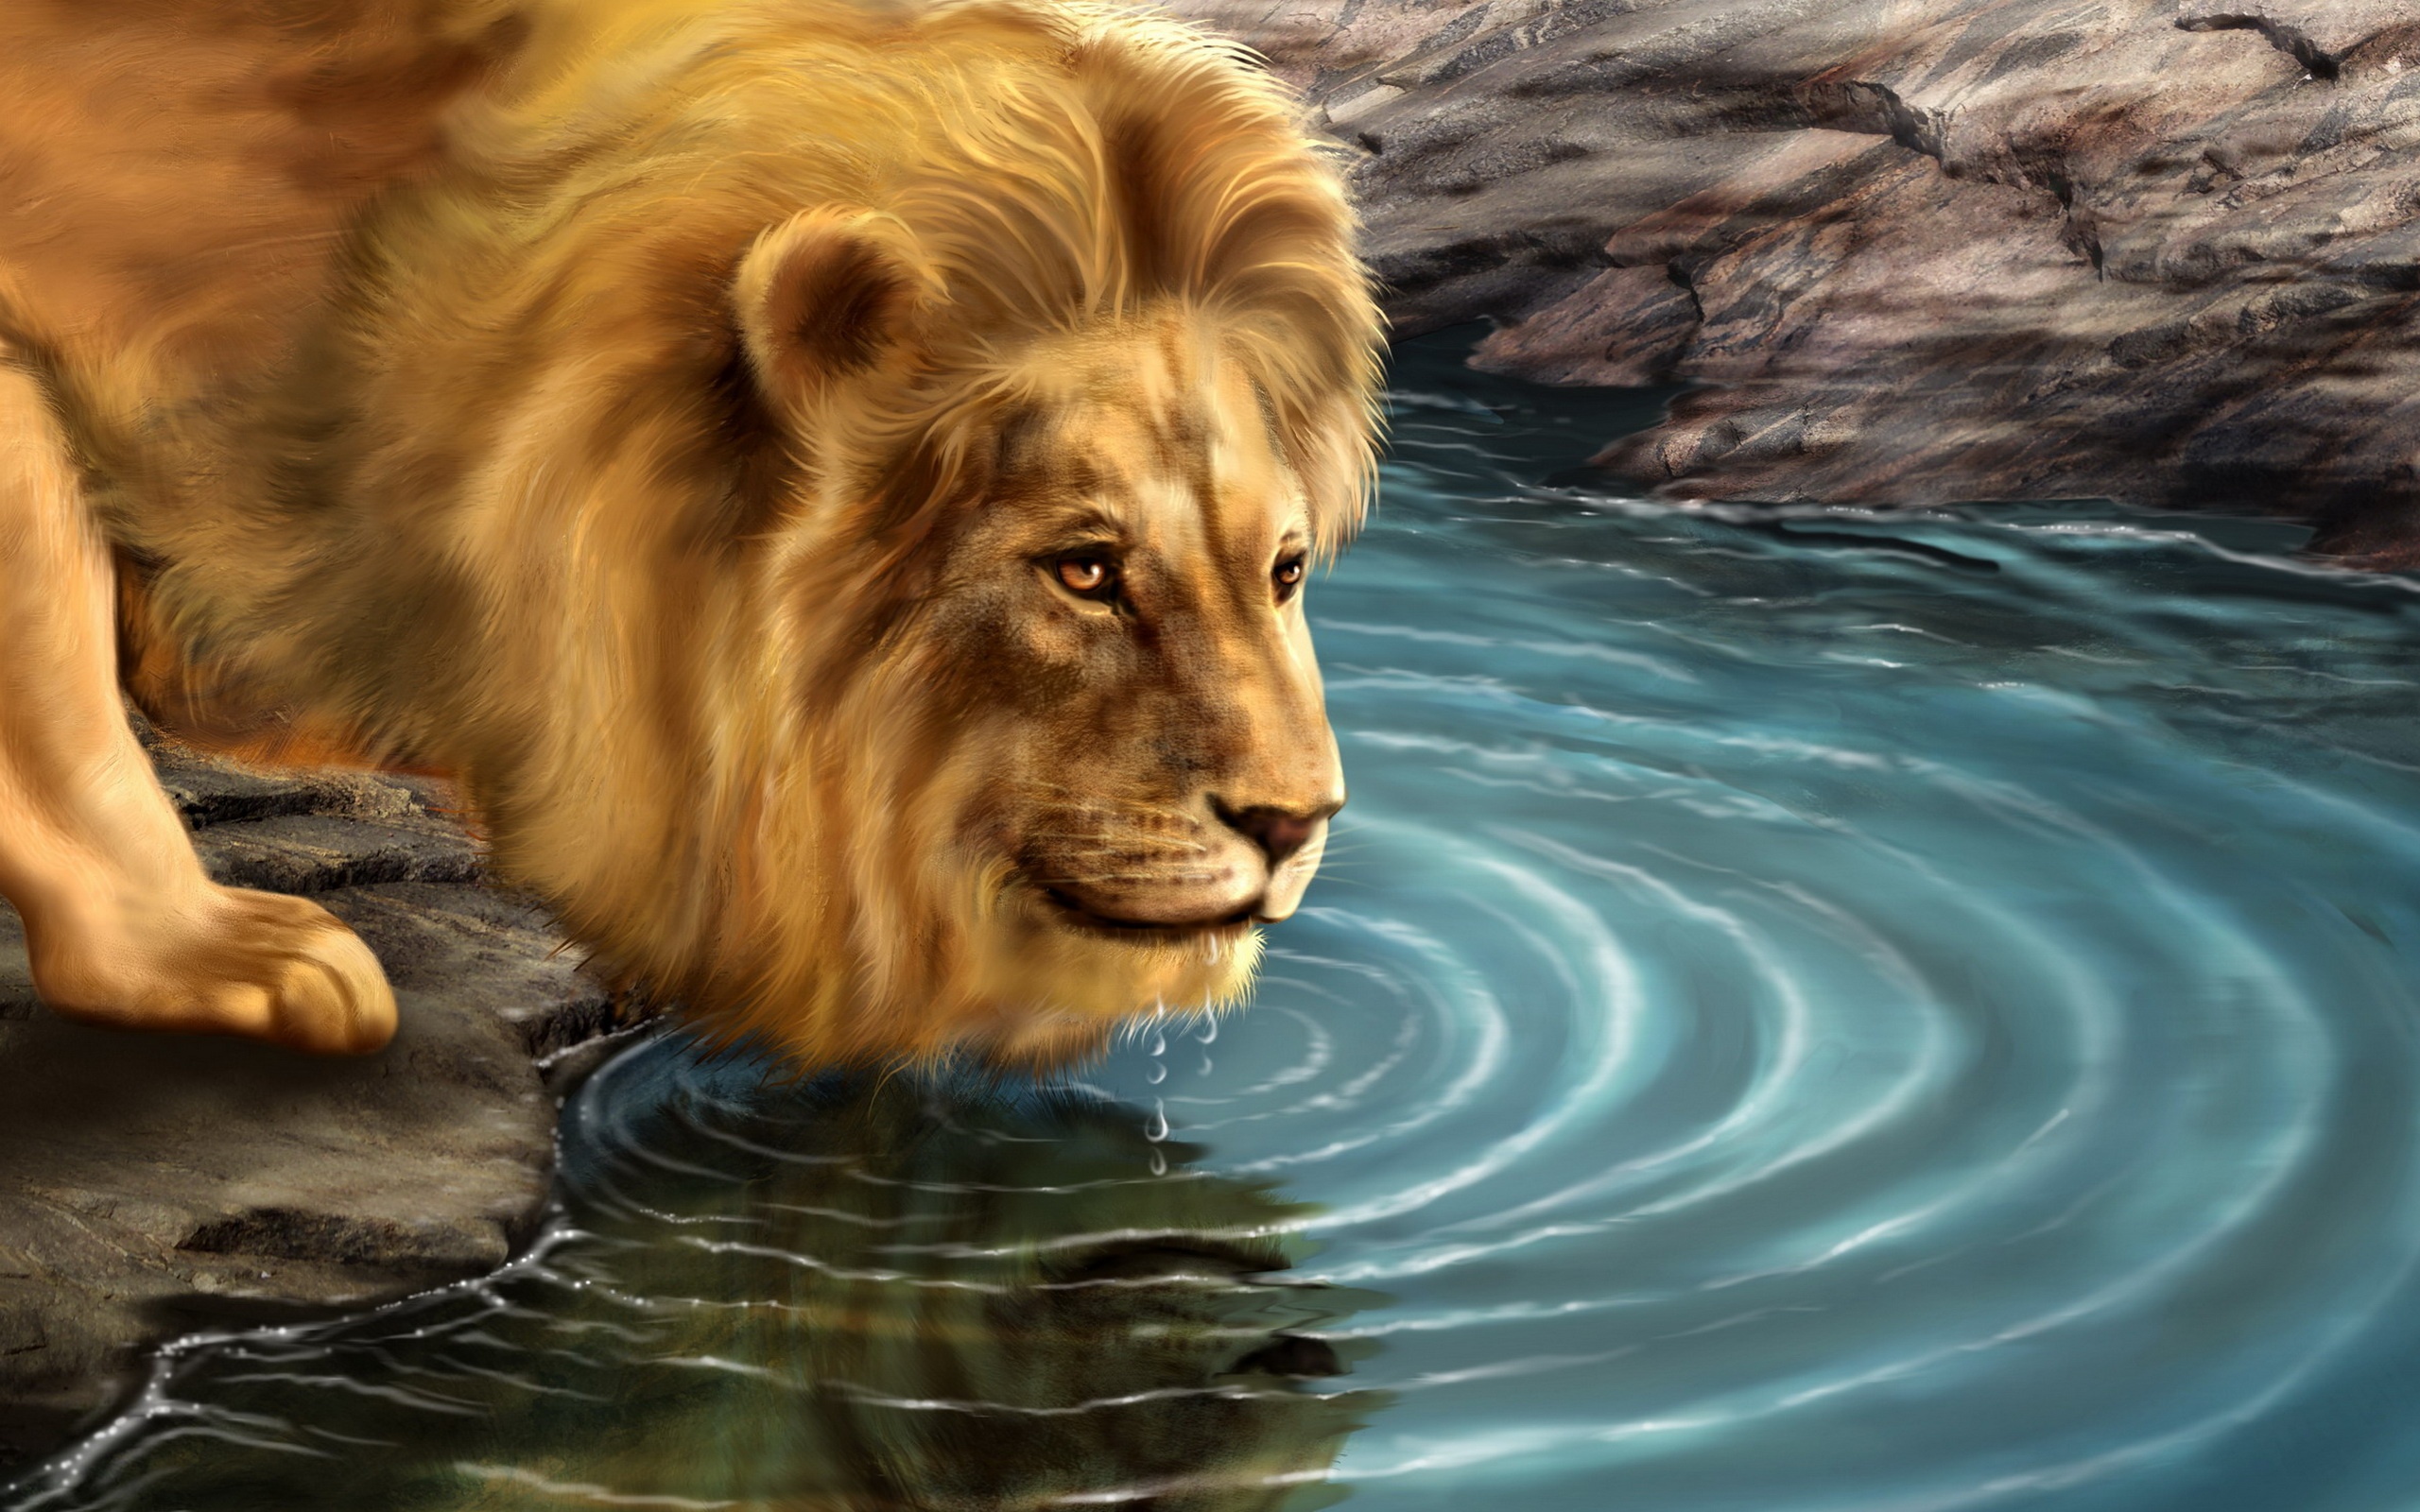 Lion with captivating artistic details. Perfect for desktop wallpaper.